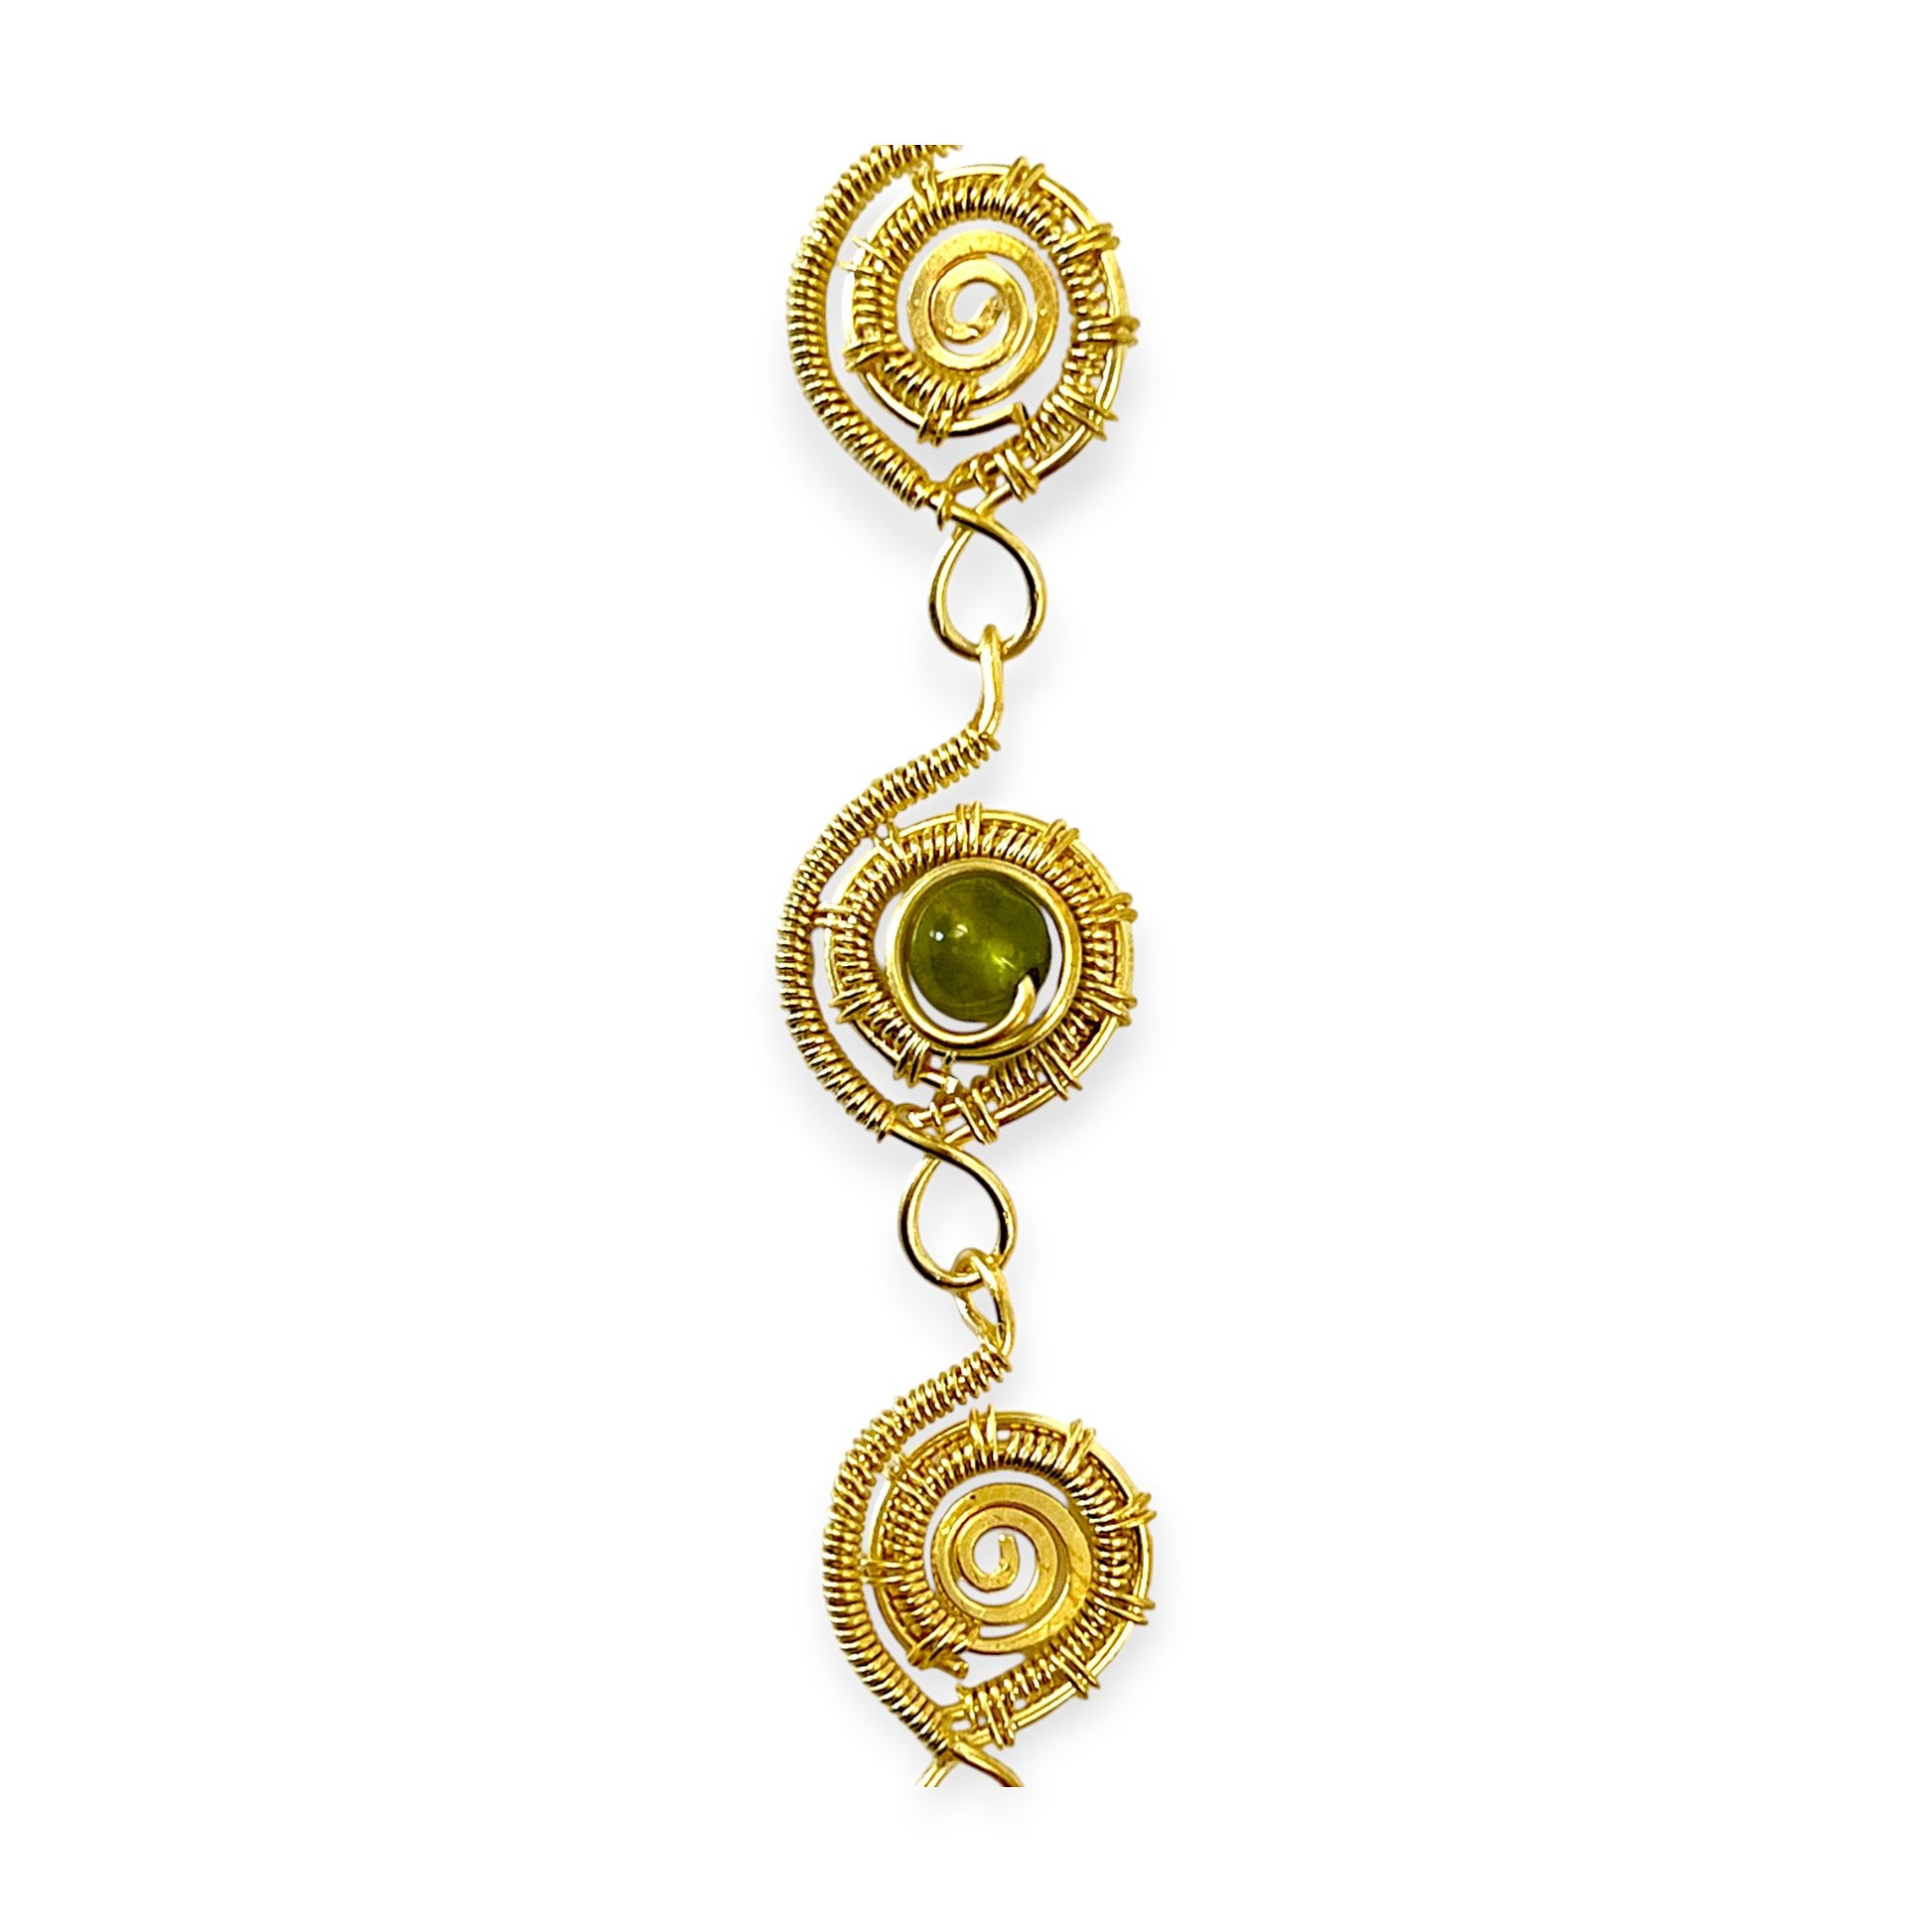 Interlocking swirl bracelet with a hint of green - Sundara Joon